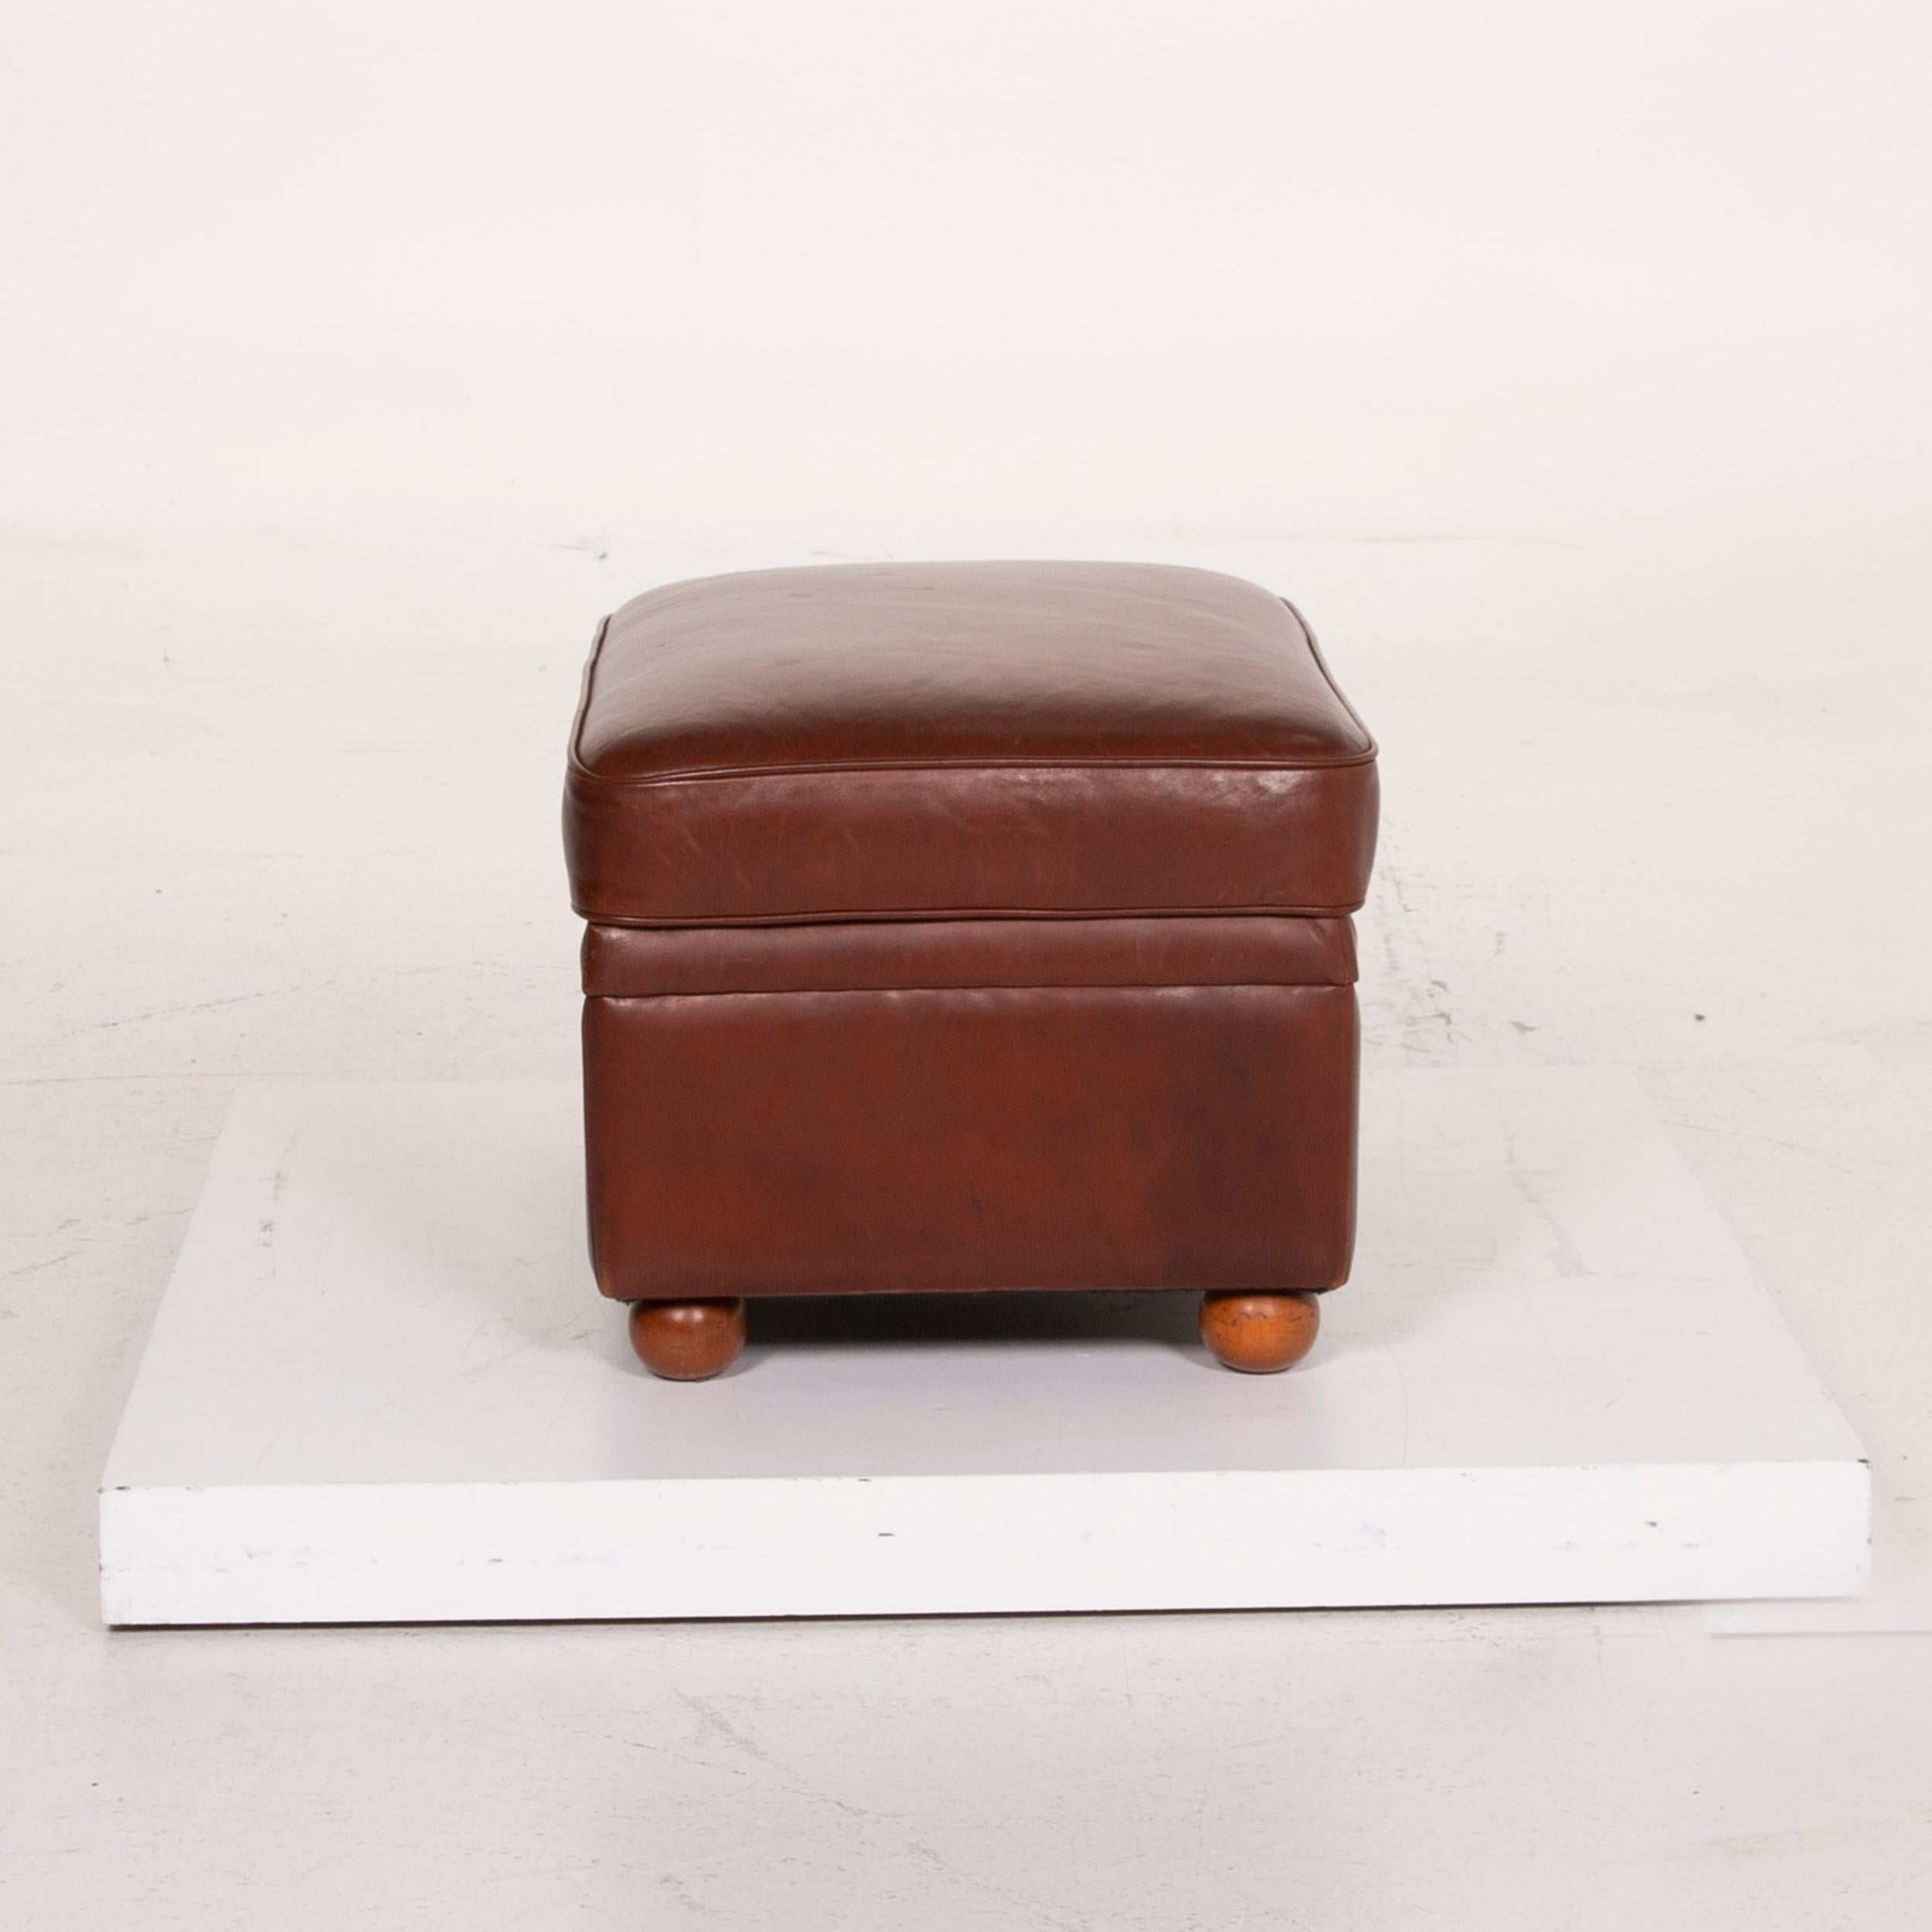 Poltrona Frau Leather Sofa Set Cognac Two-Seat Stool For Sale 8